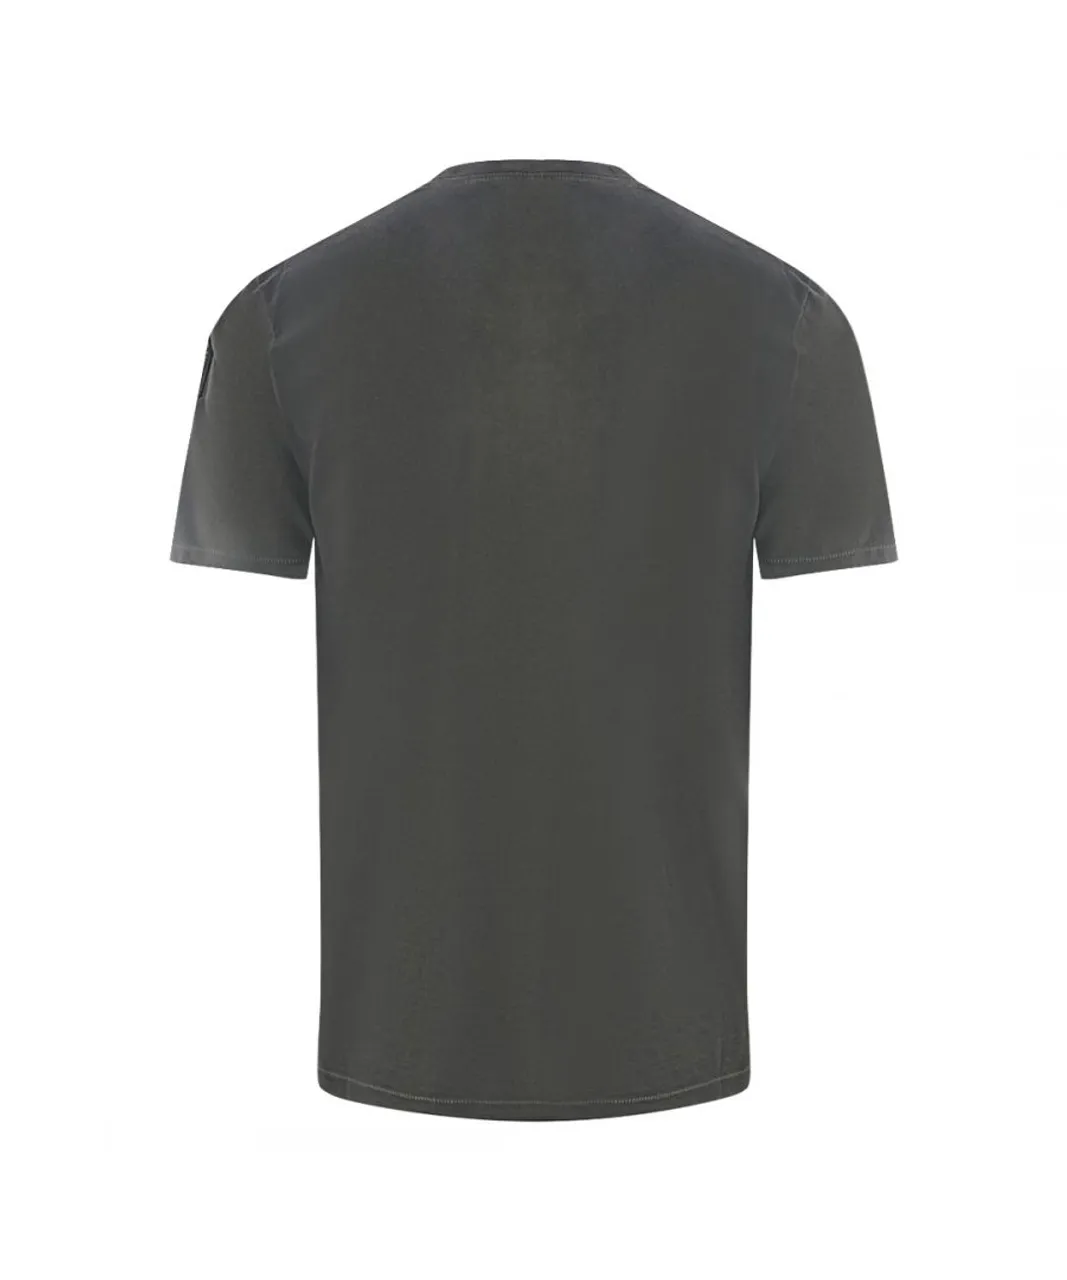 Parajumpers Mens Basic Tee Chest Pocket Black T-Shirt